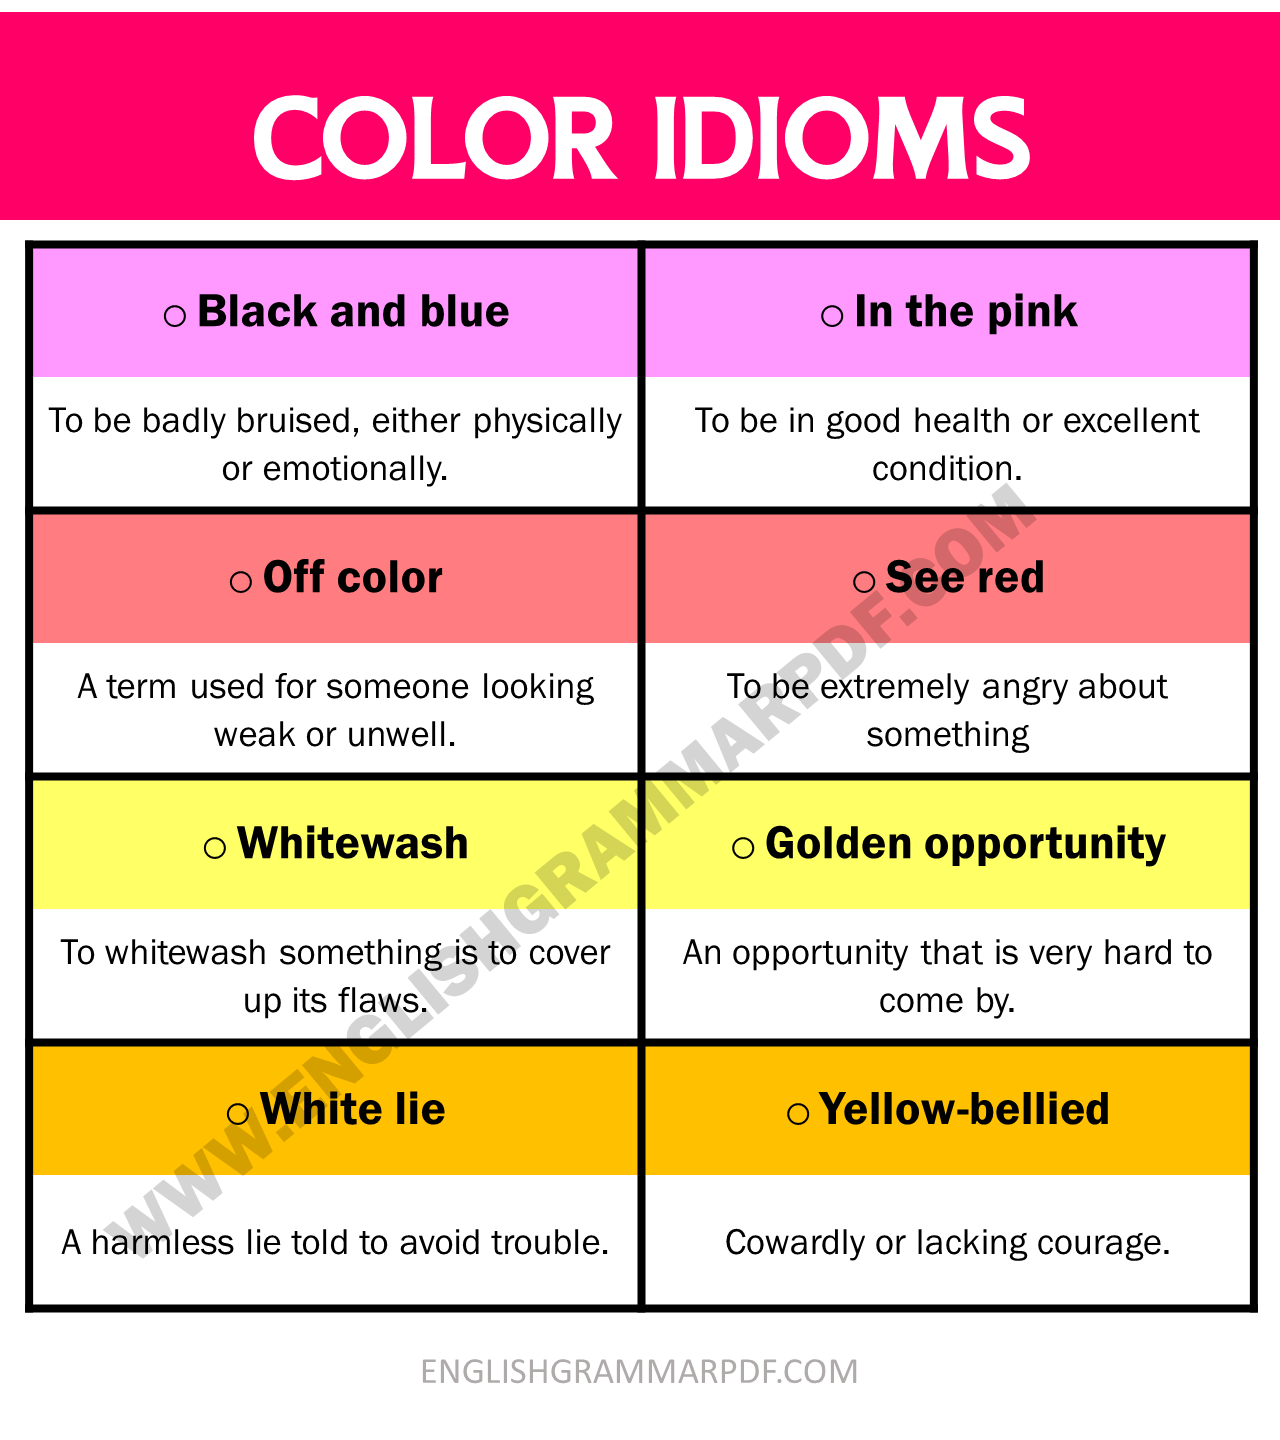 Color Idioms